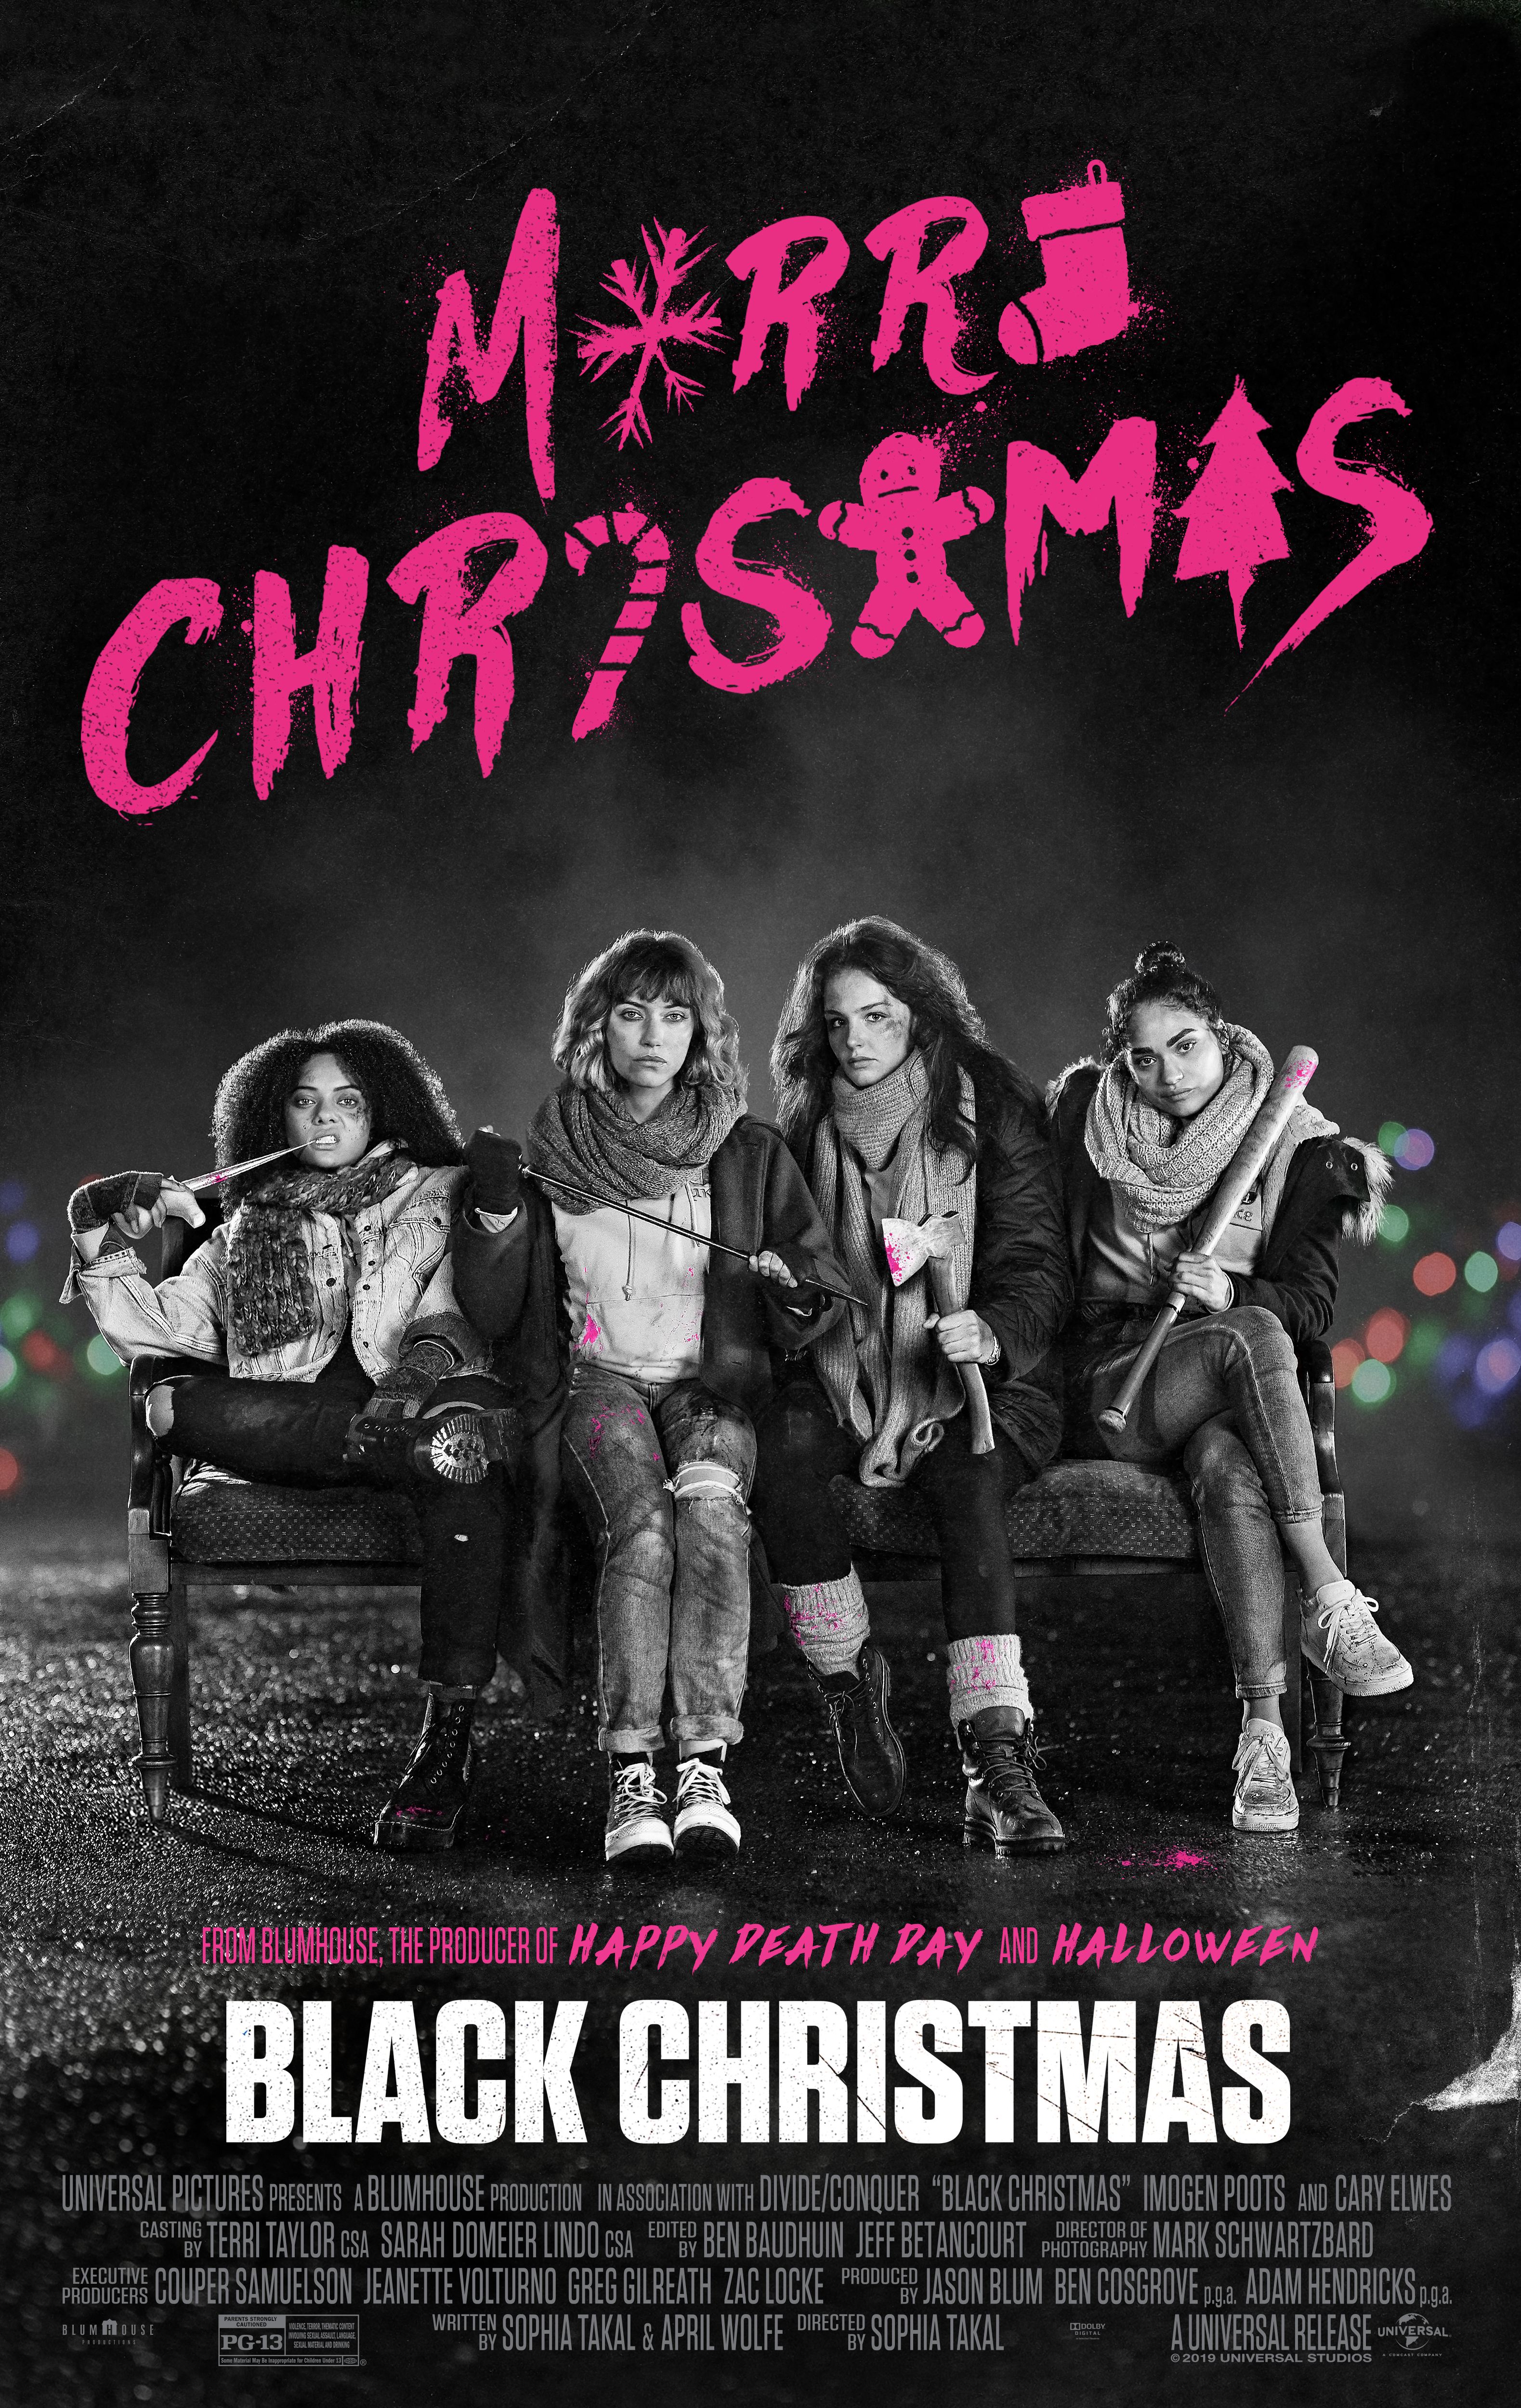 Black Christmas At An Amc Theatre Near You